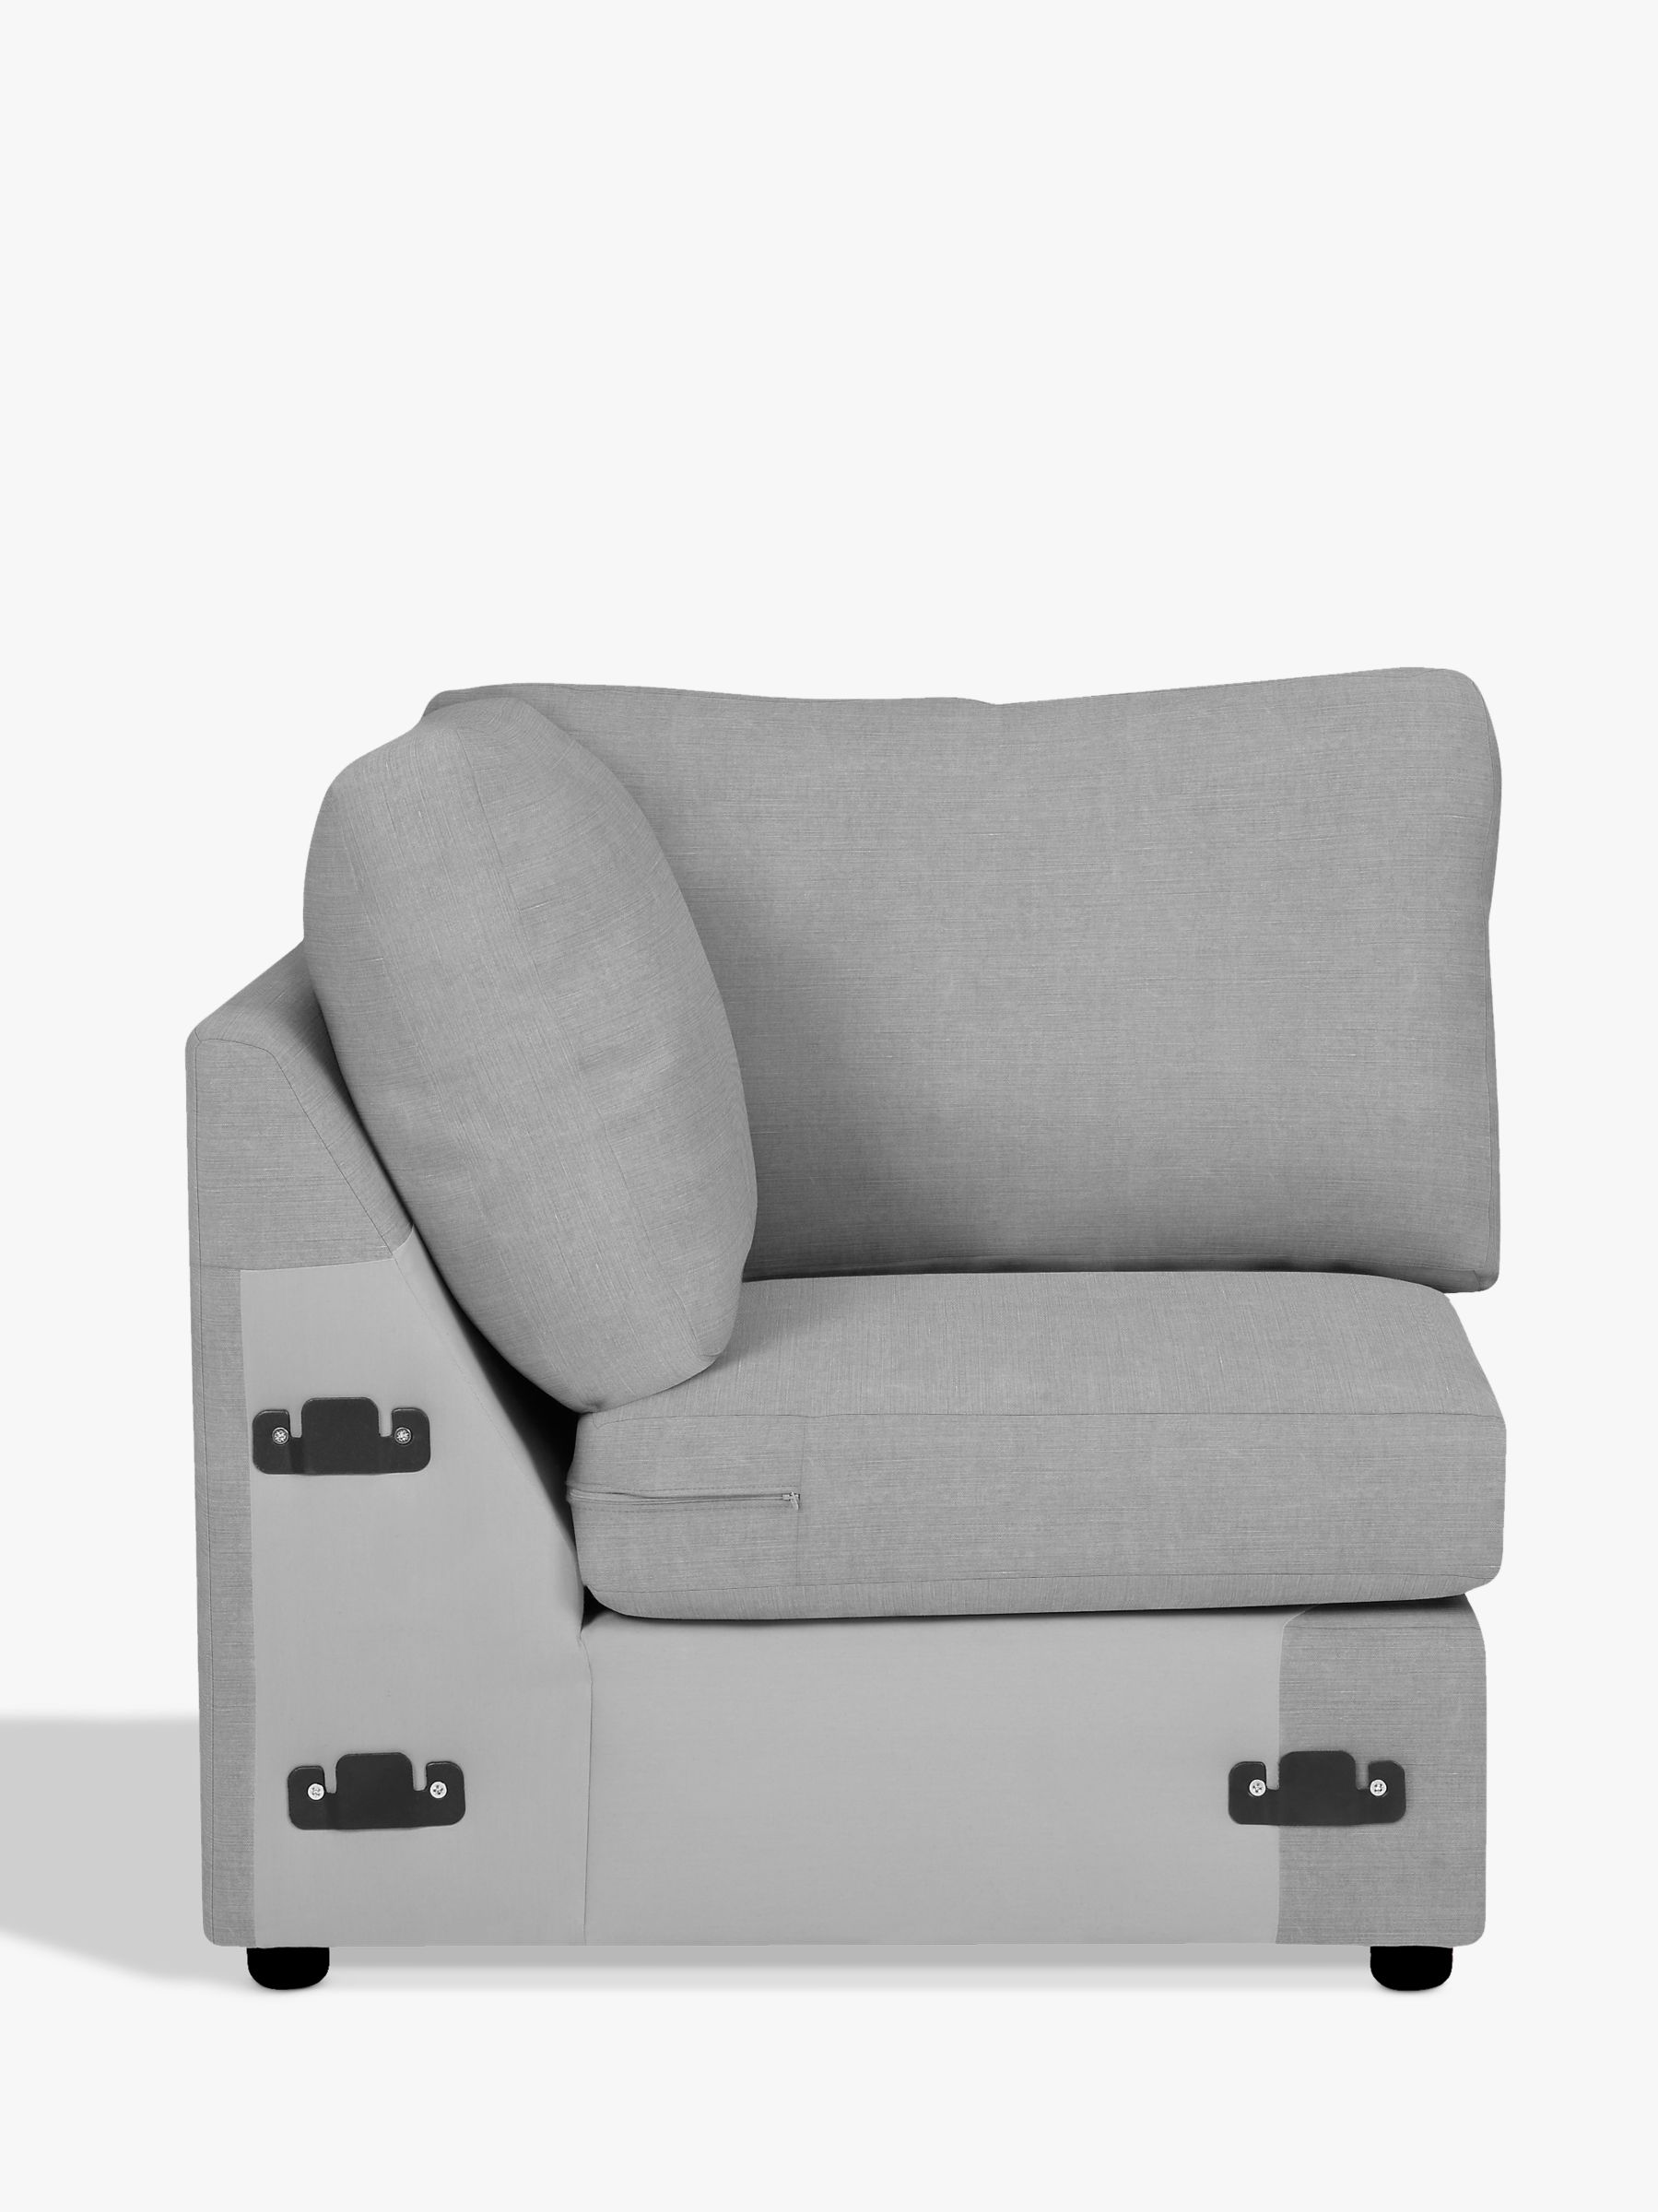 Photo of John lewis oliver armless modular corner seat unit